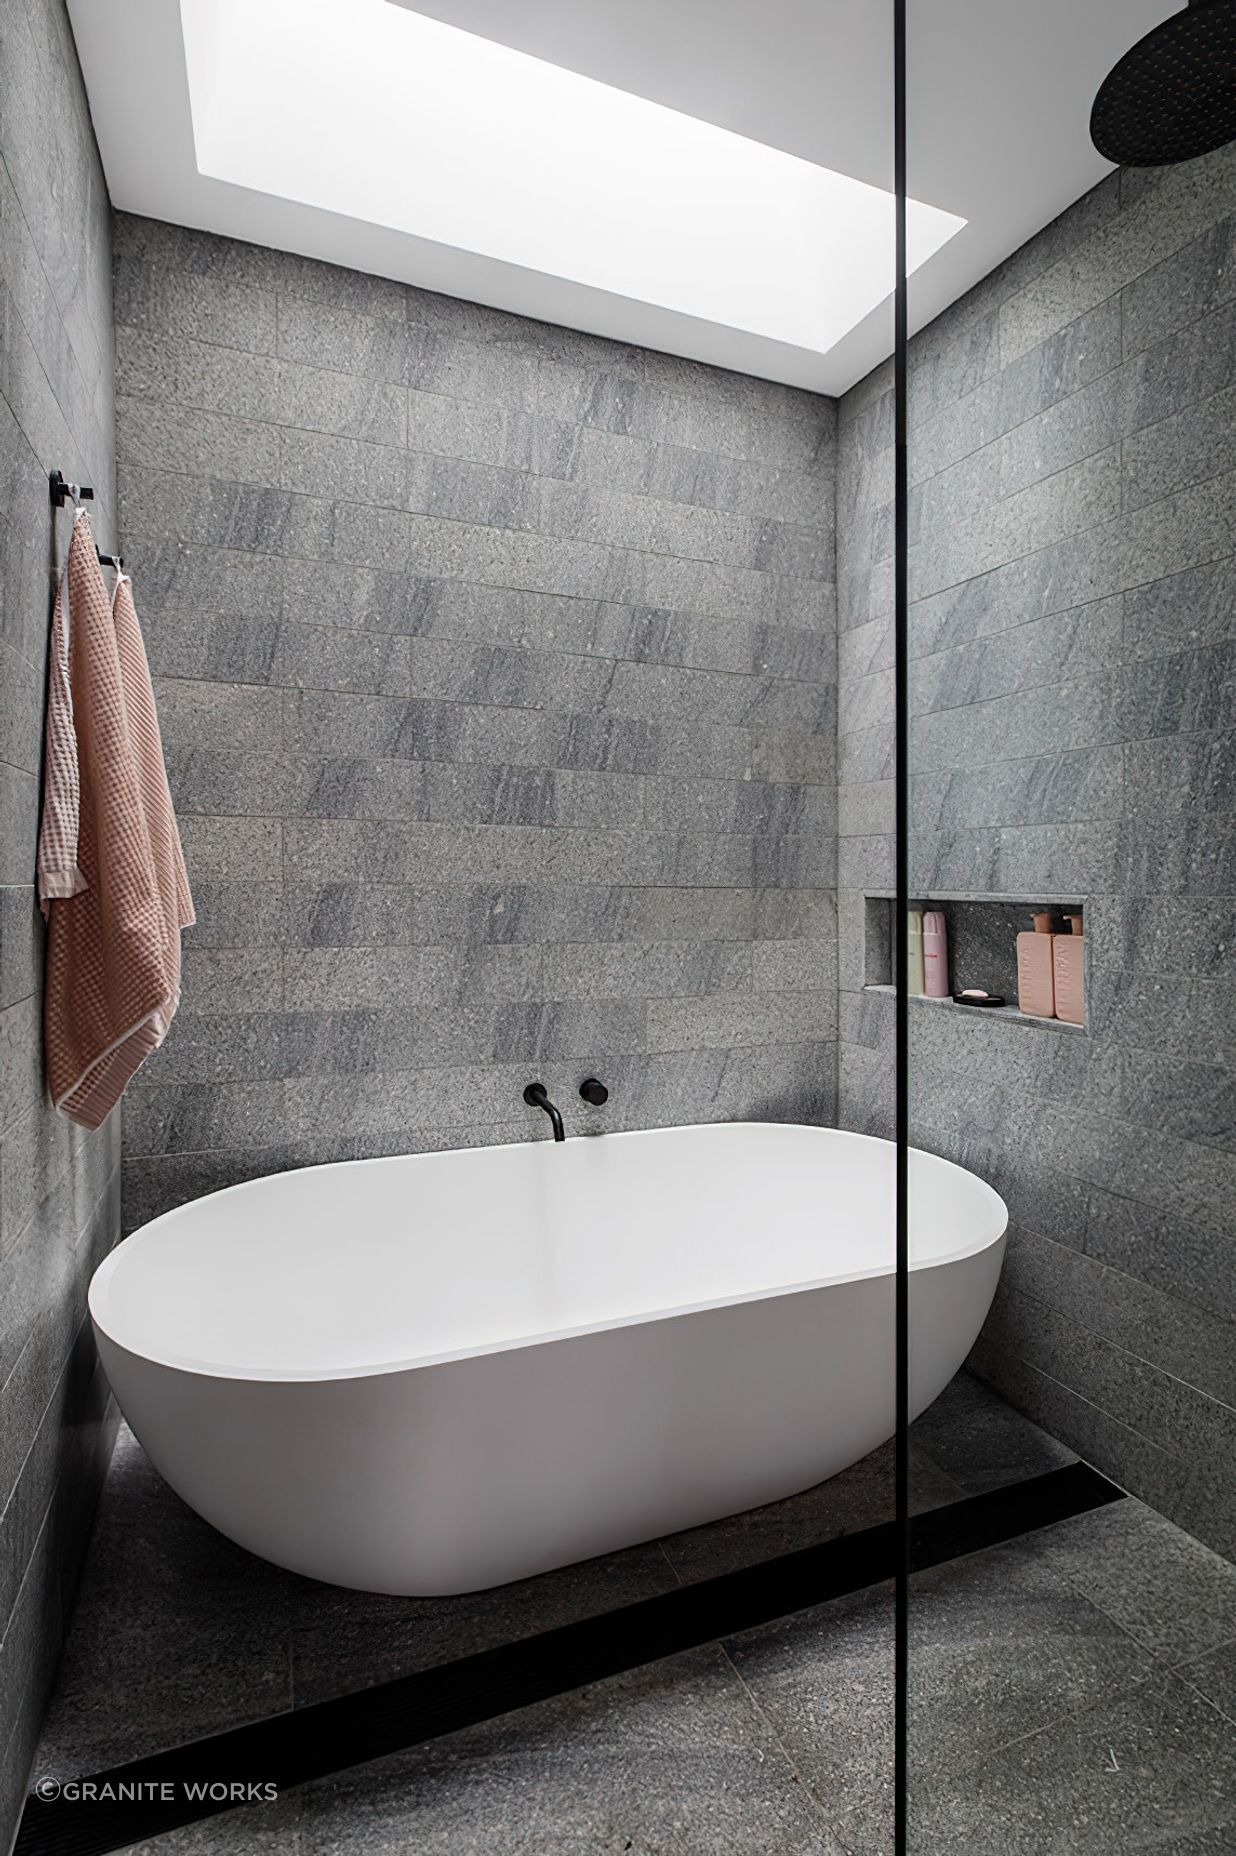 Aston grey granite tile surrounds the luxury white freestanding bath.